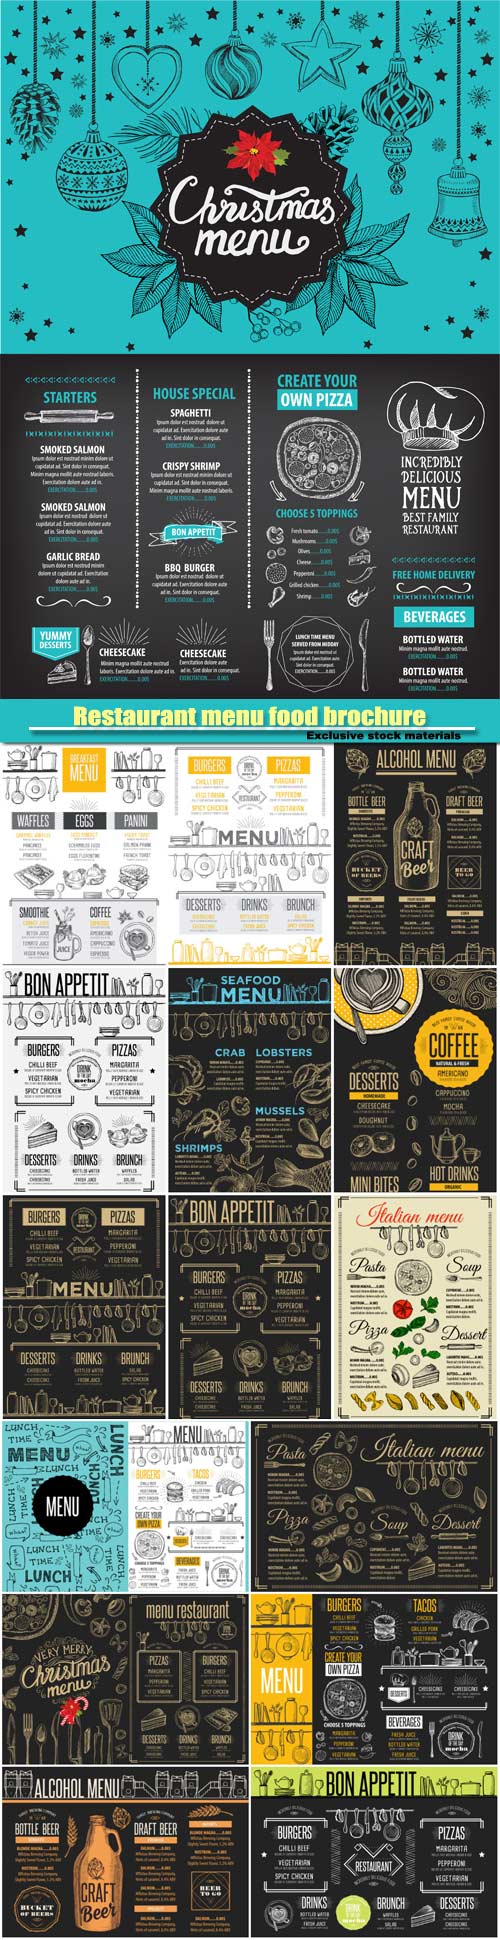 Restaurant menu placemat food brochure, cafe template design, vintage creat ...